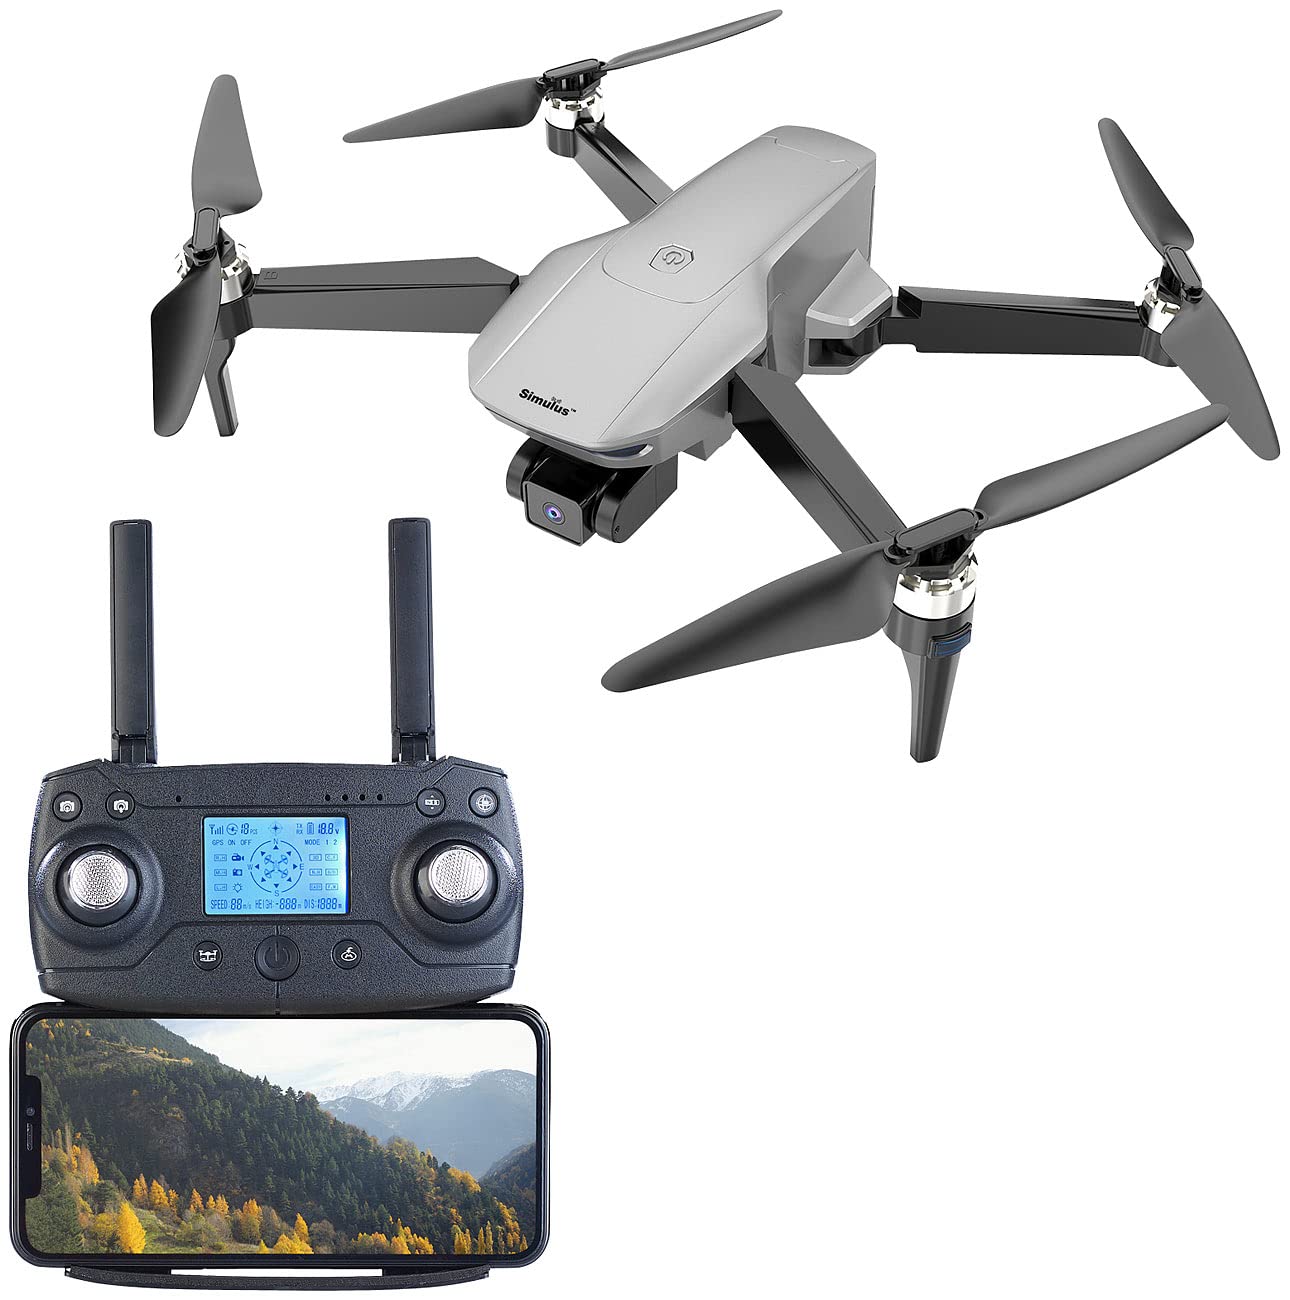 Simulus Dronen: Faltbare GPS-Drohne mit 4K-Cam, 3-Achsen-Gimbal, Brushless-Motor, App (Copter, Quadcopter-Drohne, Ferngesteuerte) von Simulus